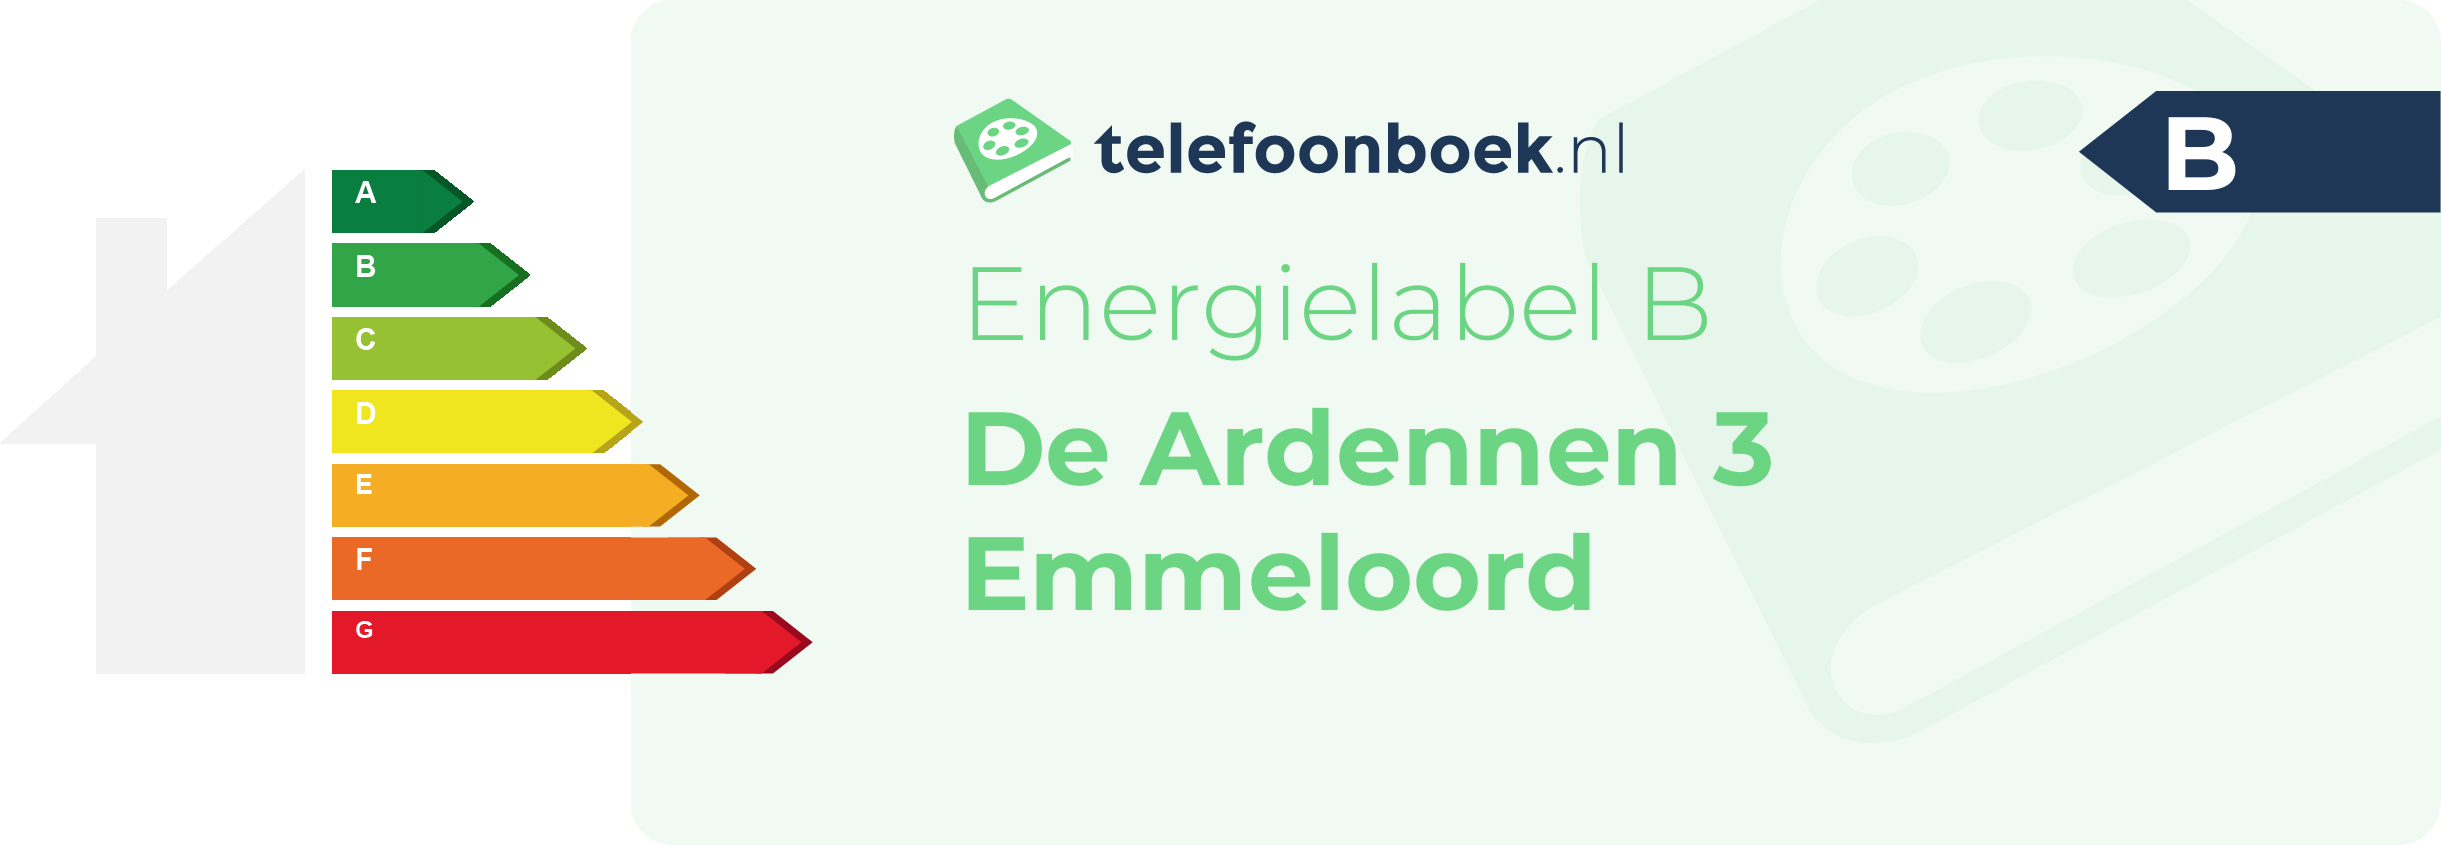 Energielabel De Ardennen 3 Emmeloord